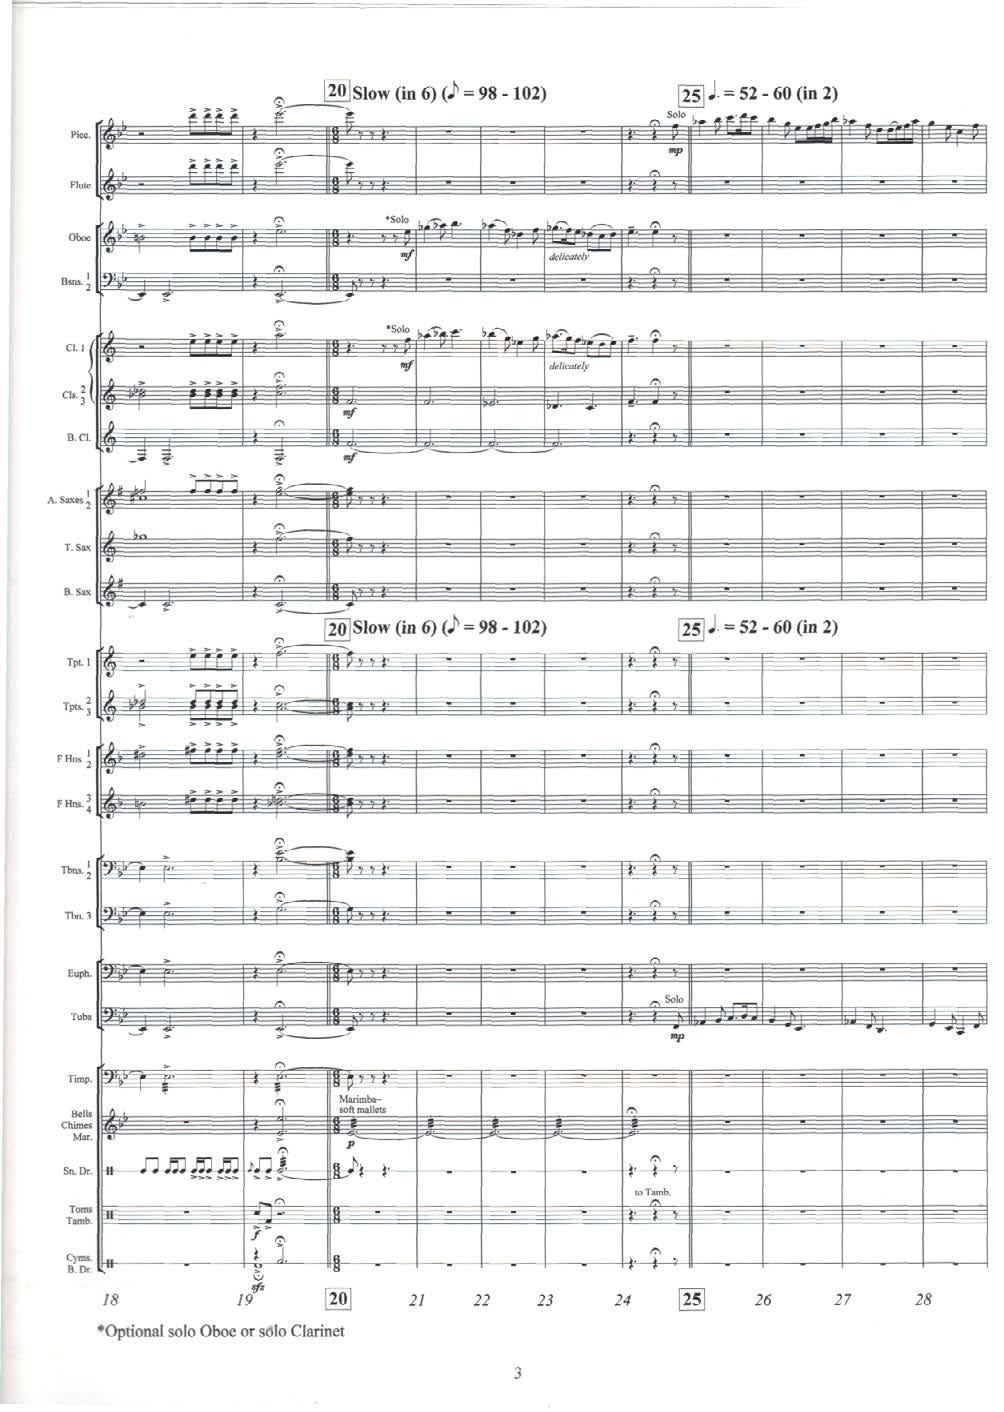 Pice. FfFf [20] Slow (in 6) (J> = 98-102) I. Solo mp» Flute Oboe l.t delicately Bsns. J Solo Cl. 1 cis.: delicately ftf 5= tt B.Cl. f A. Saxes, B.